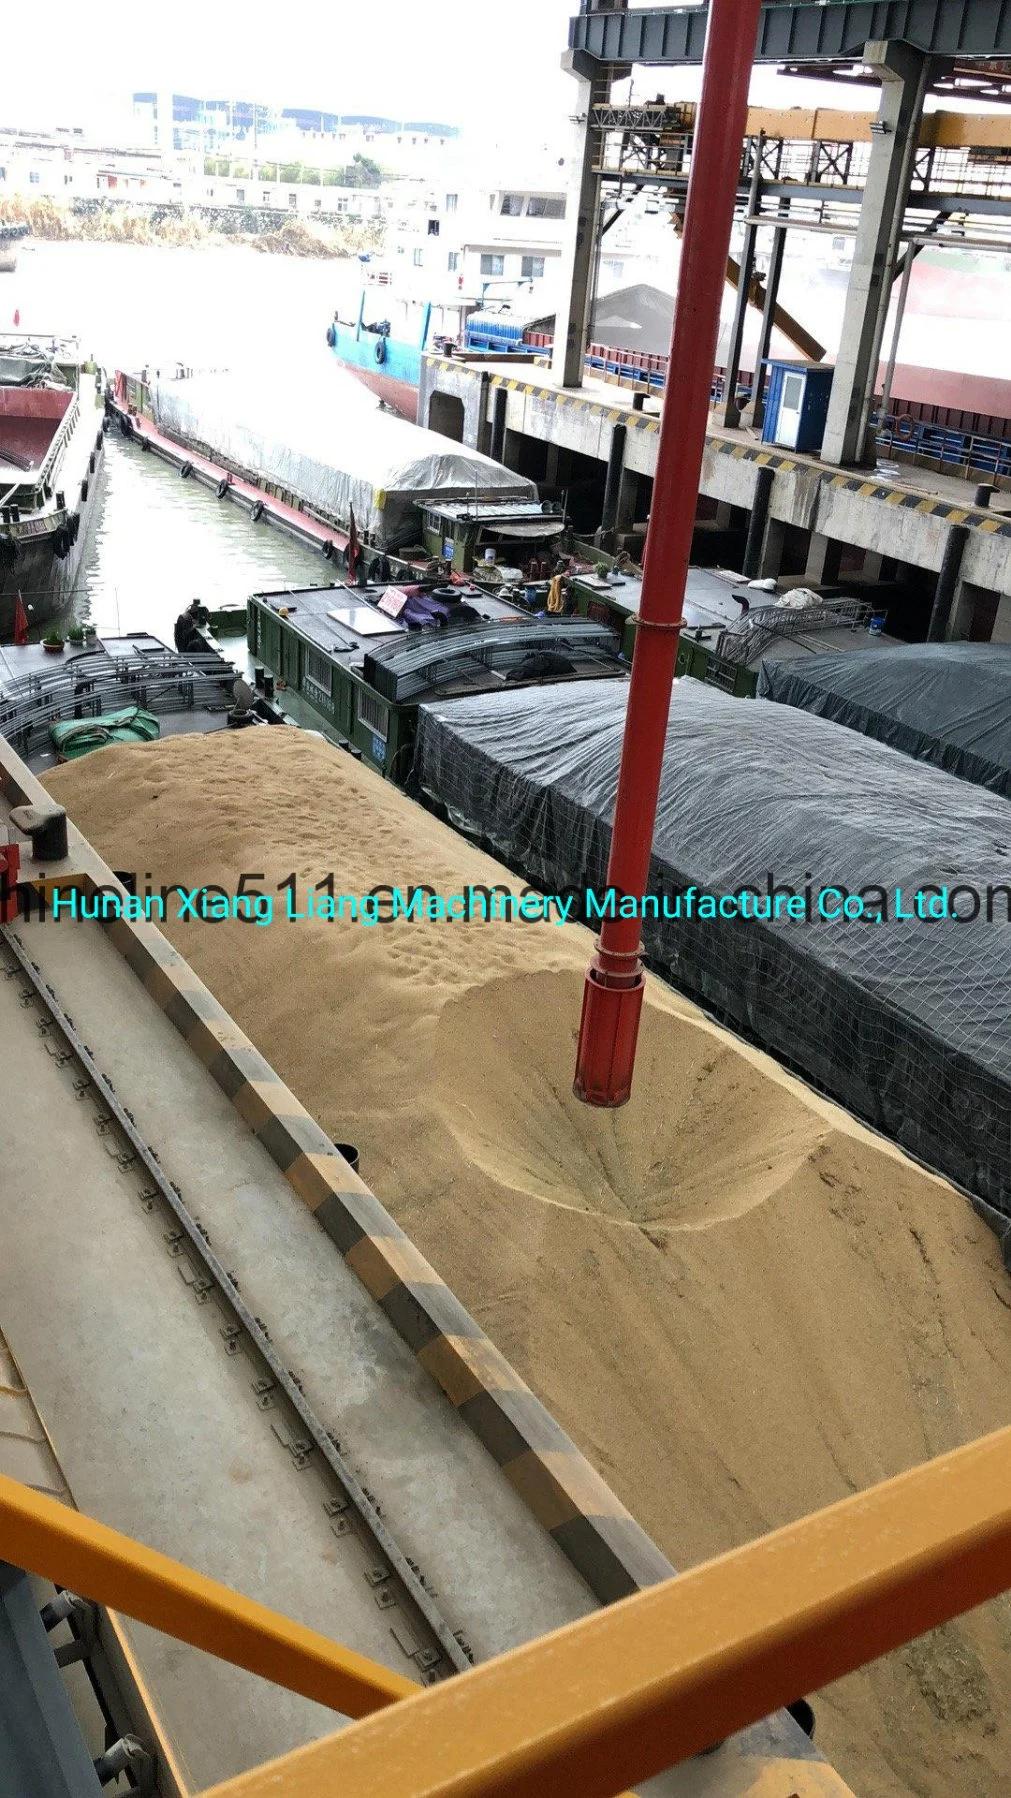 China Top Quality Series Grain Unloader, Series Ship Unloader, Grain Pump, Series Port Grain Unloader and Pneumatic Mobile Conveyors. Mobile Grain Unloader